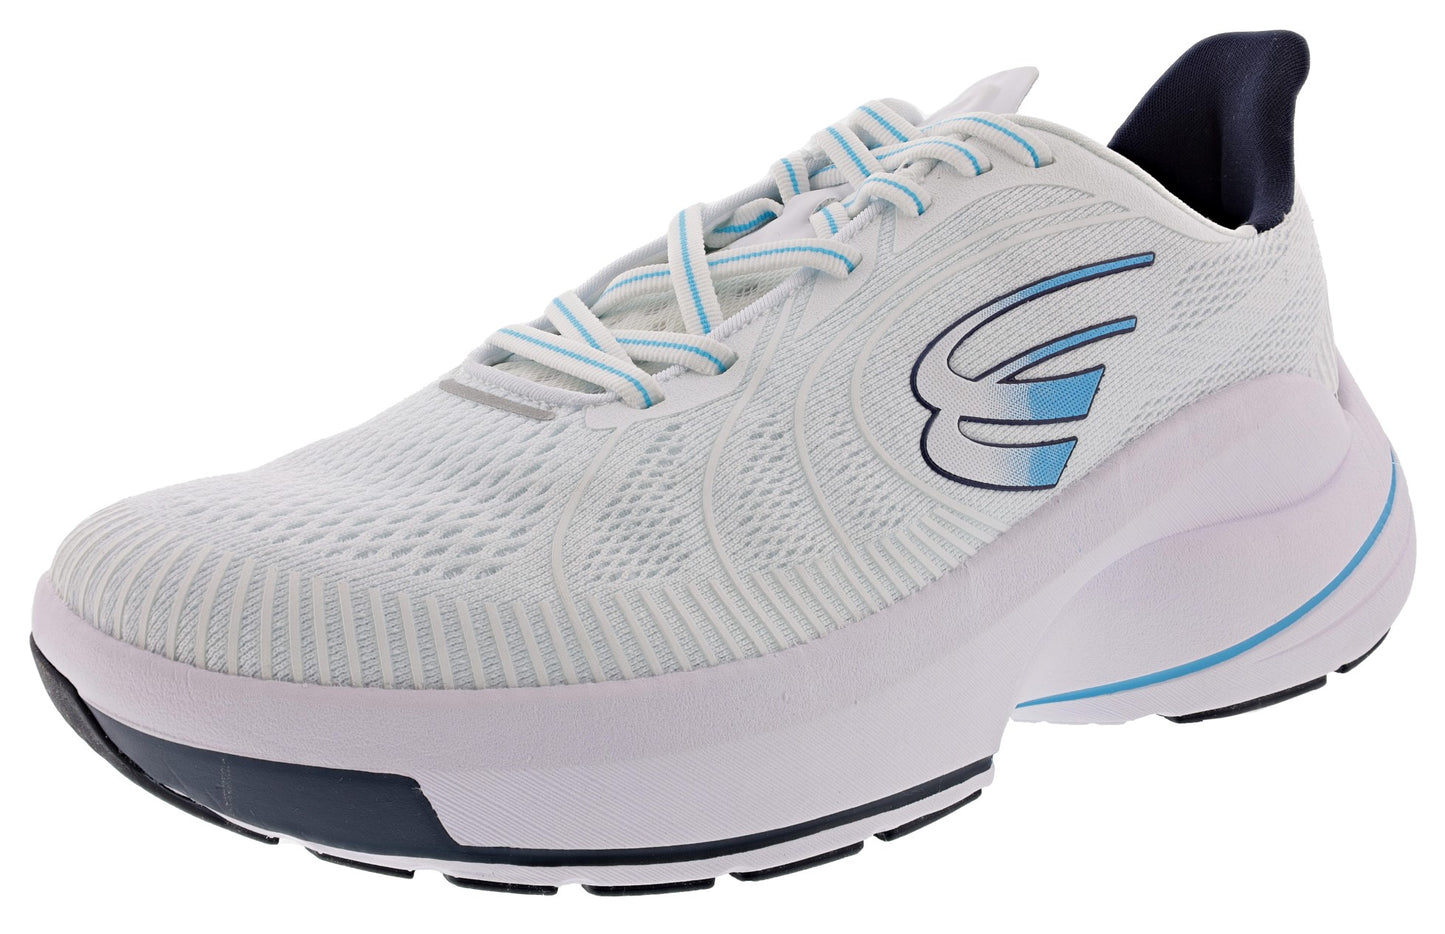 
                  
                    Spira Men's Wavemax Performance Running Shoes
                  
                